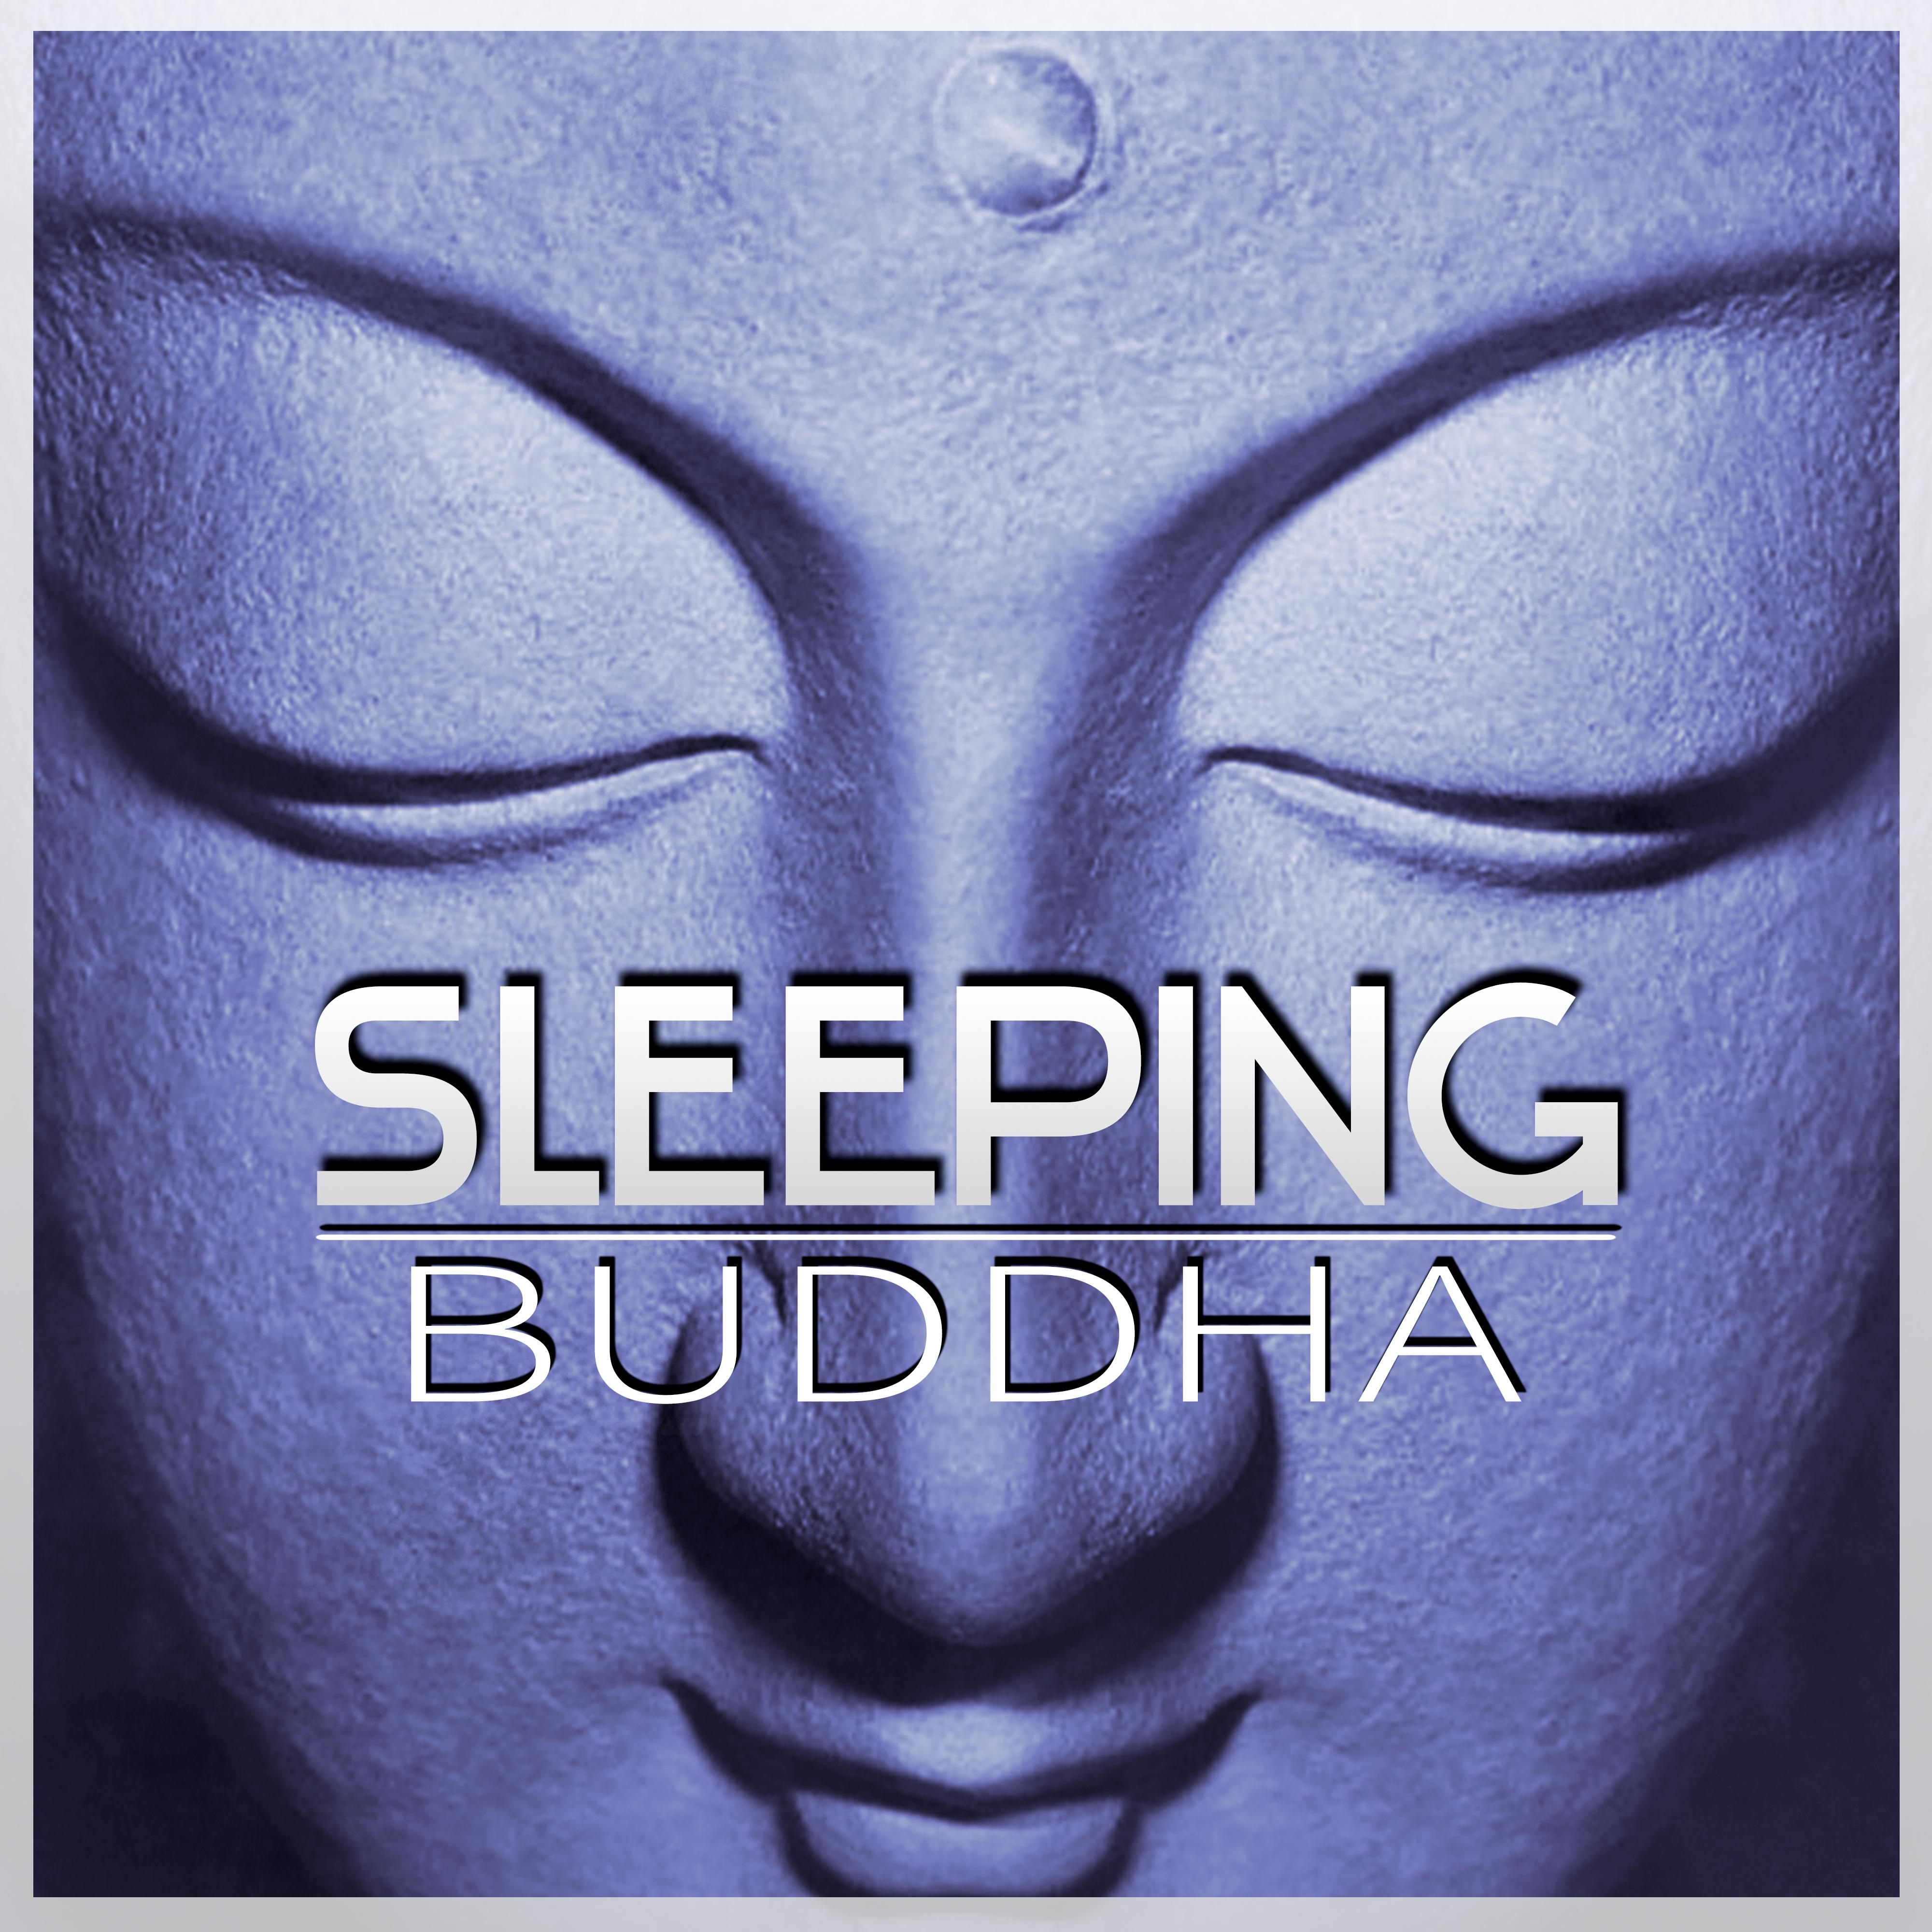 Sleeping Buddha  Spiritual Healing Session, Sunset Yoga Practice, Deep Meditation, Personal Growth, Relaxing Home SPA